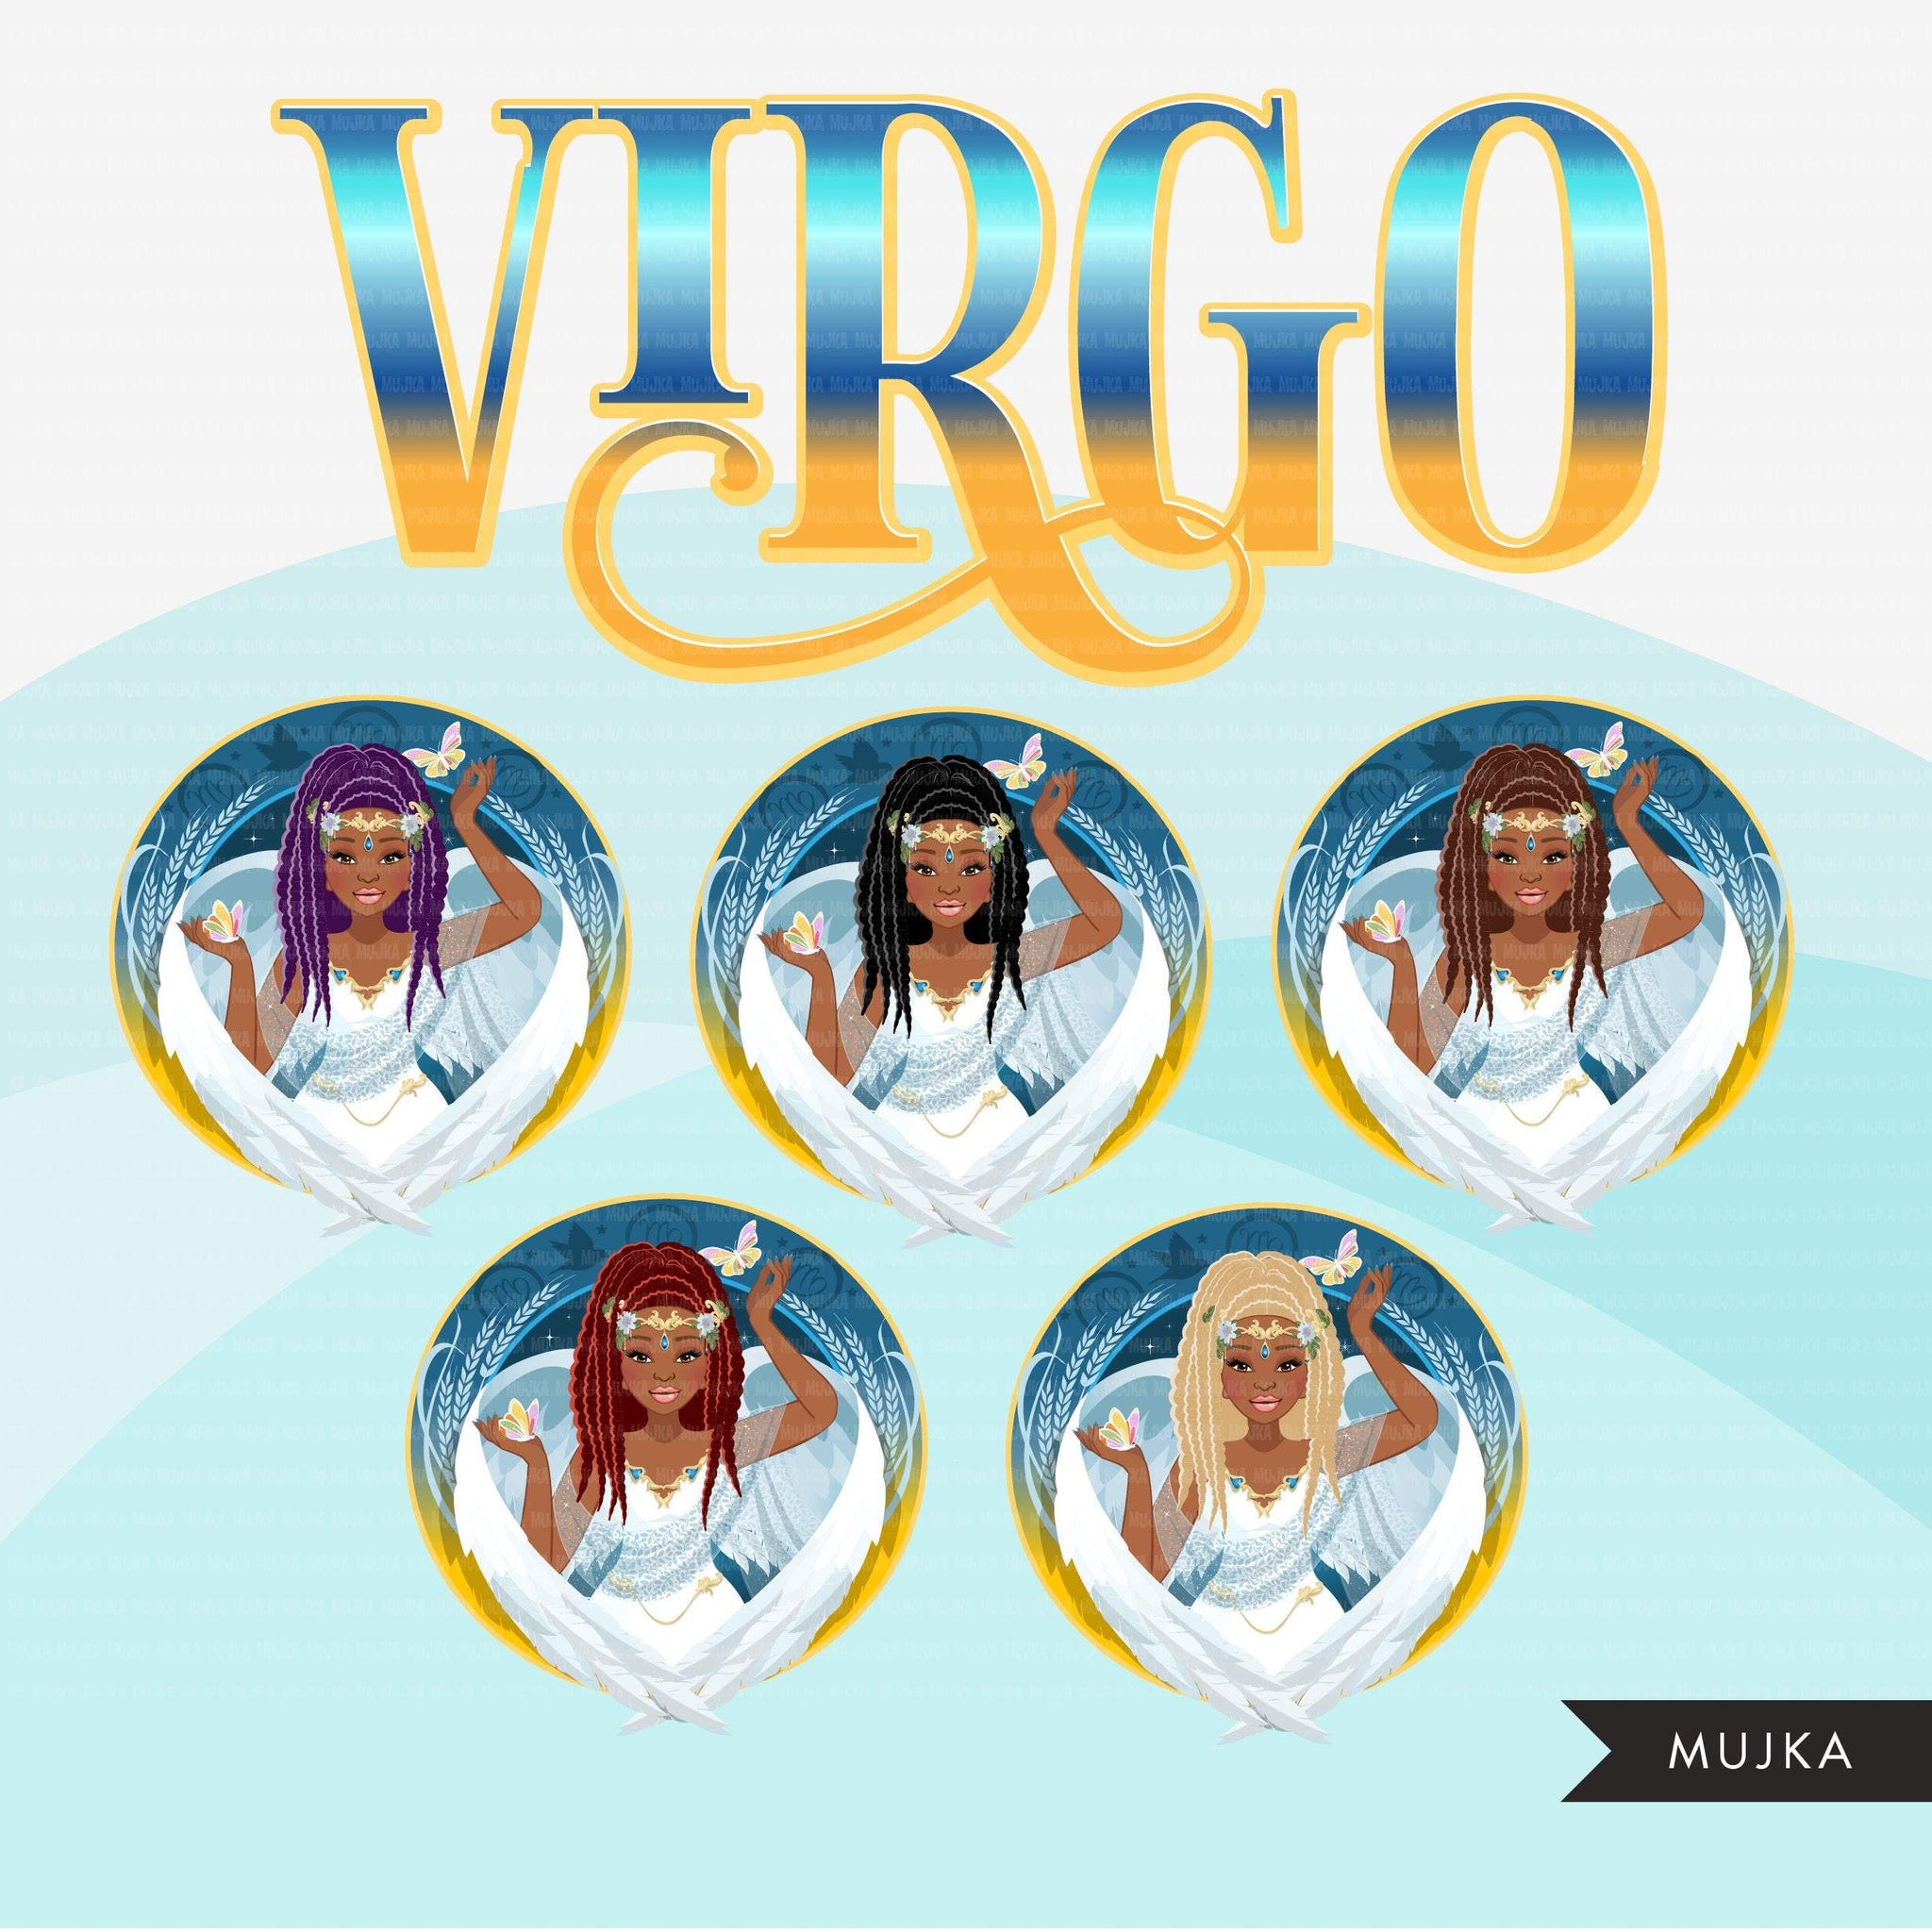 Zodiac Virgo Clipart, Png digital download, Sublimation Graphics for Cricut & Cameo, Black Braids Woman Horoscope sign designs